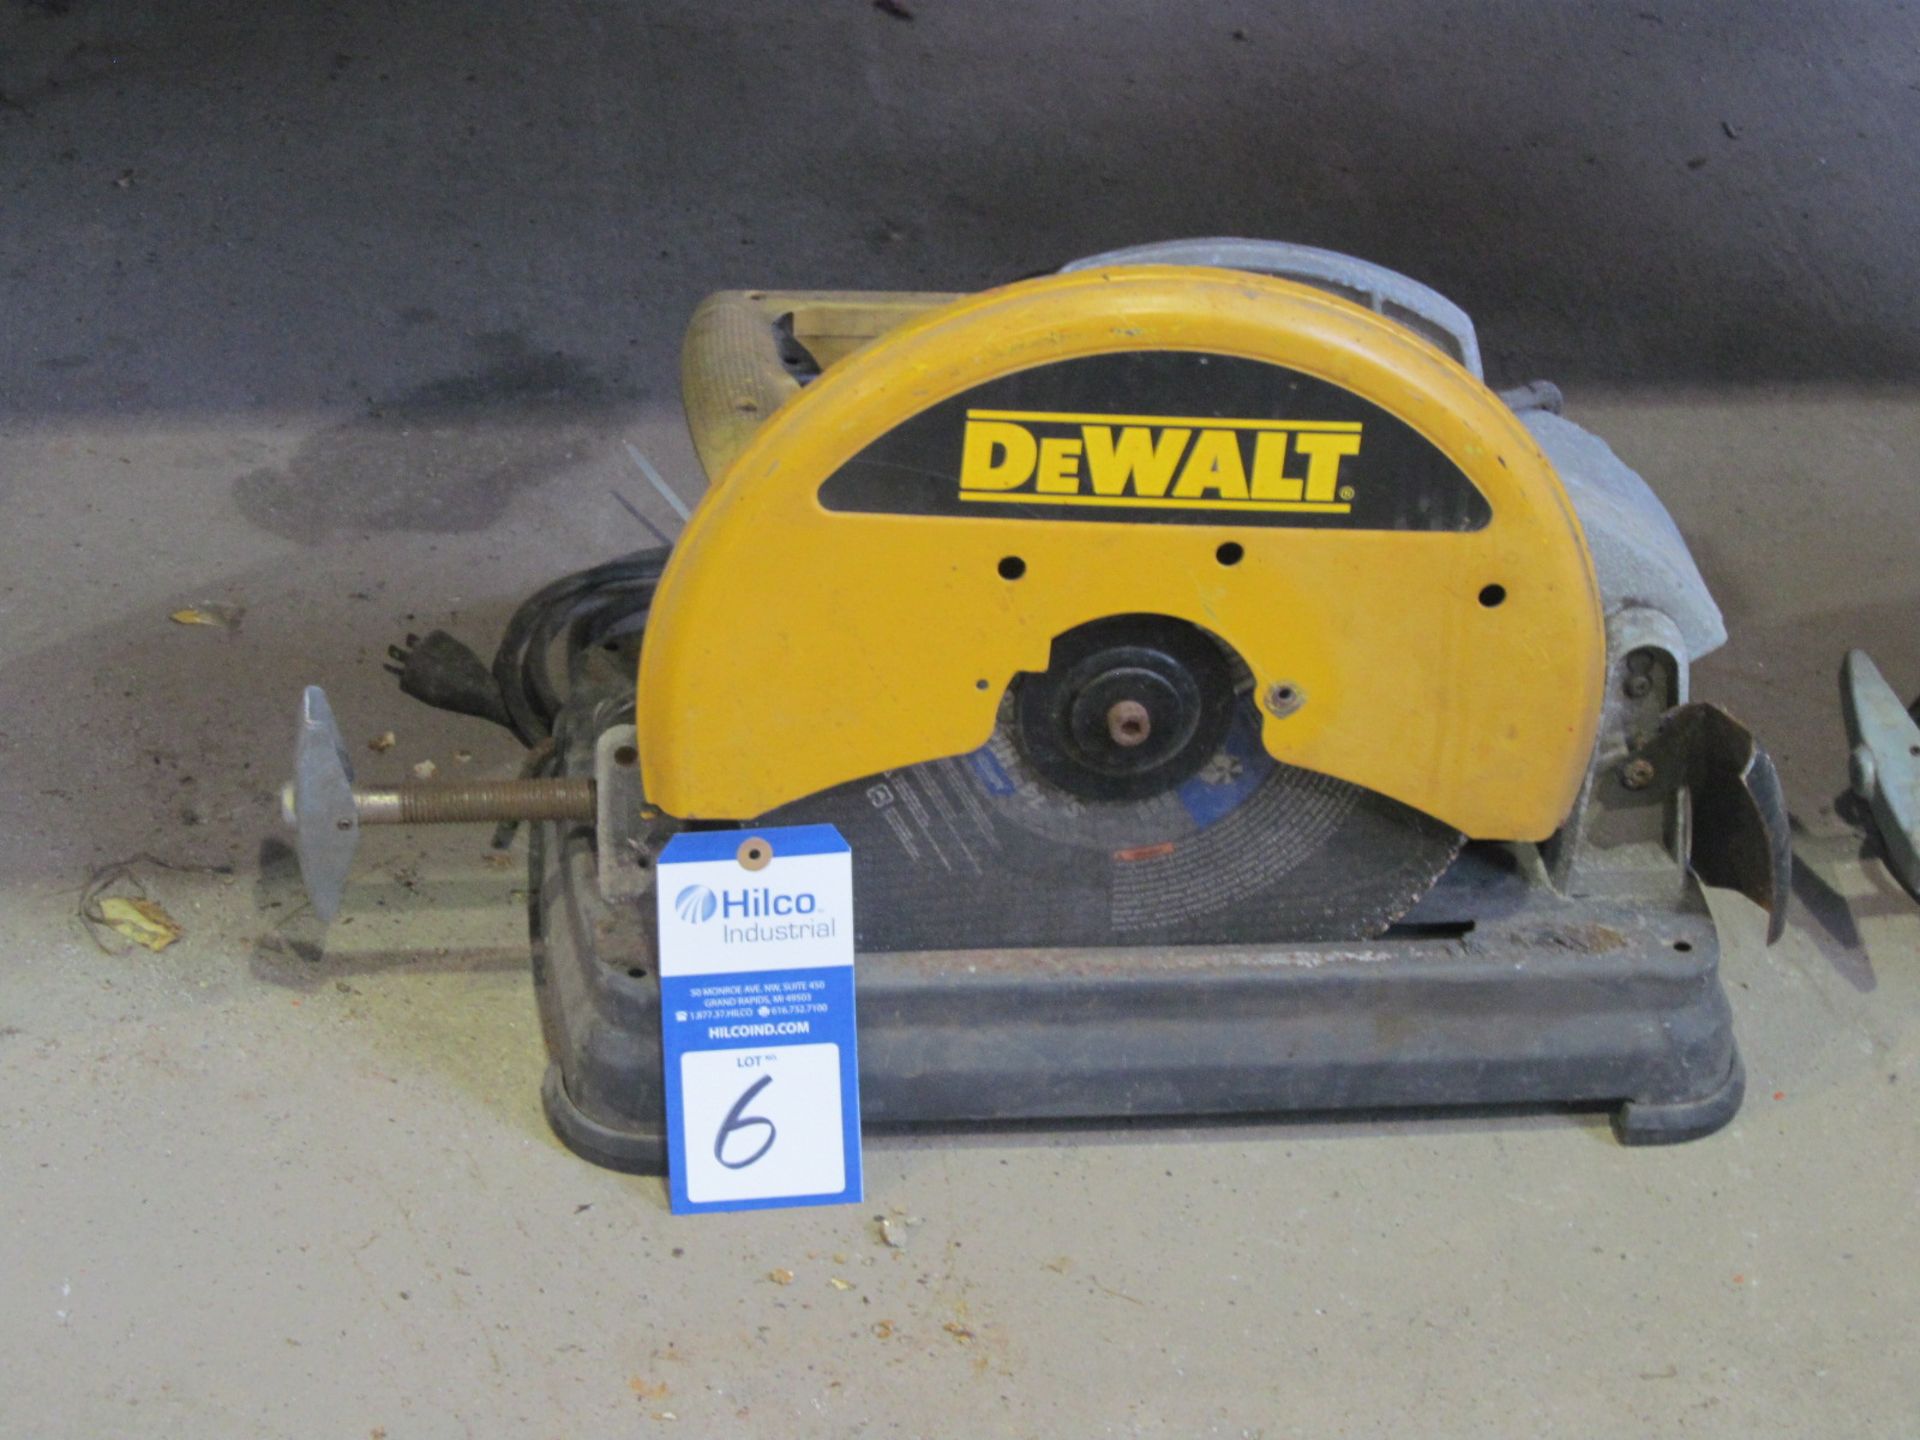 DeWalt Model DW871 14" Chop Saw; Serial Number: 752850